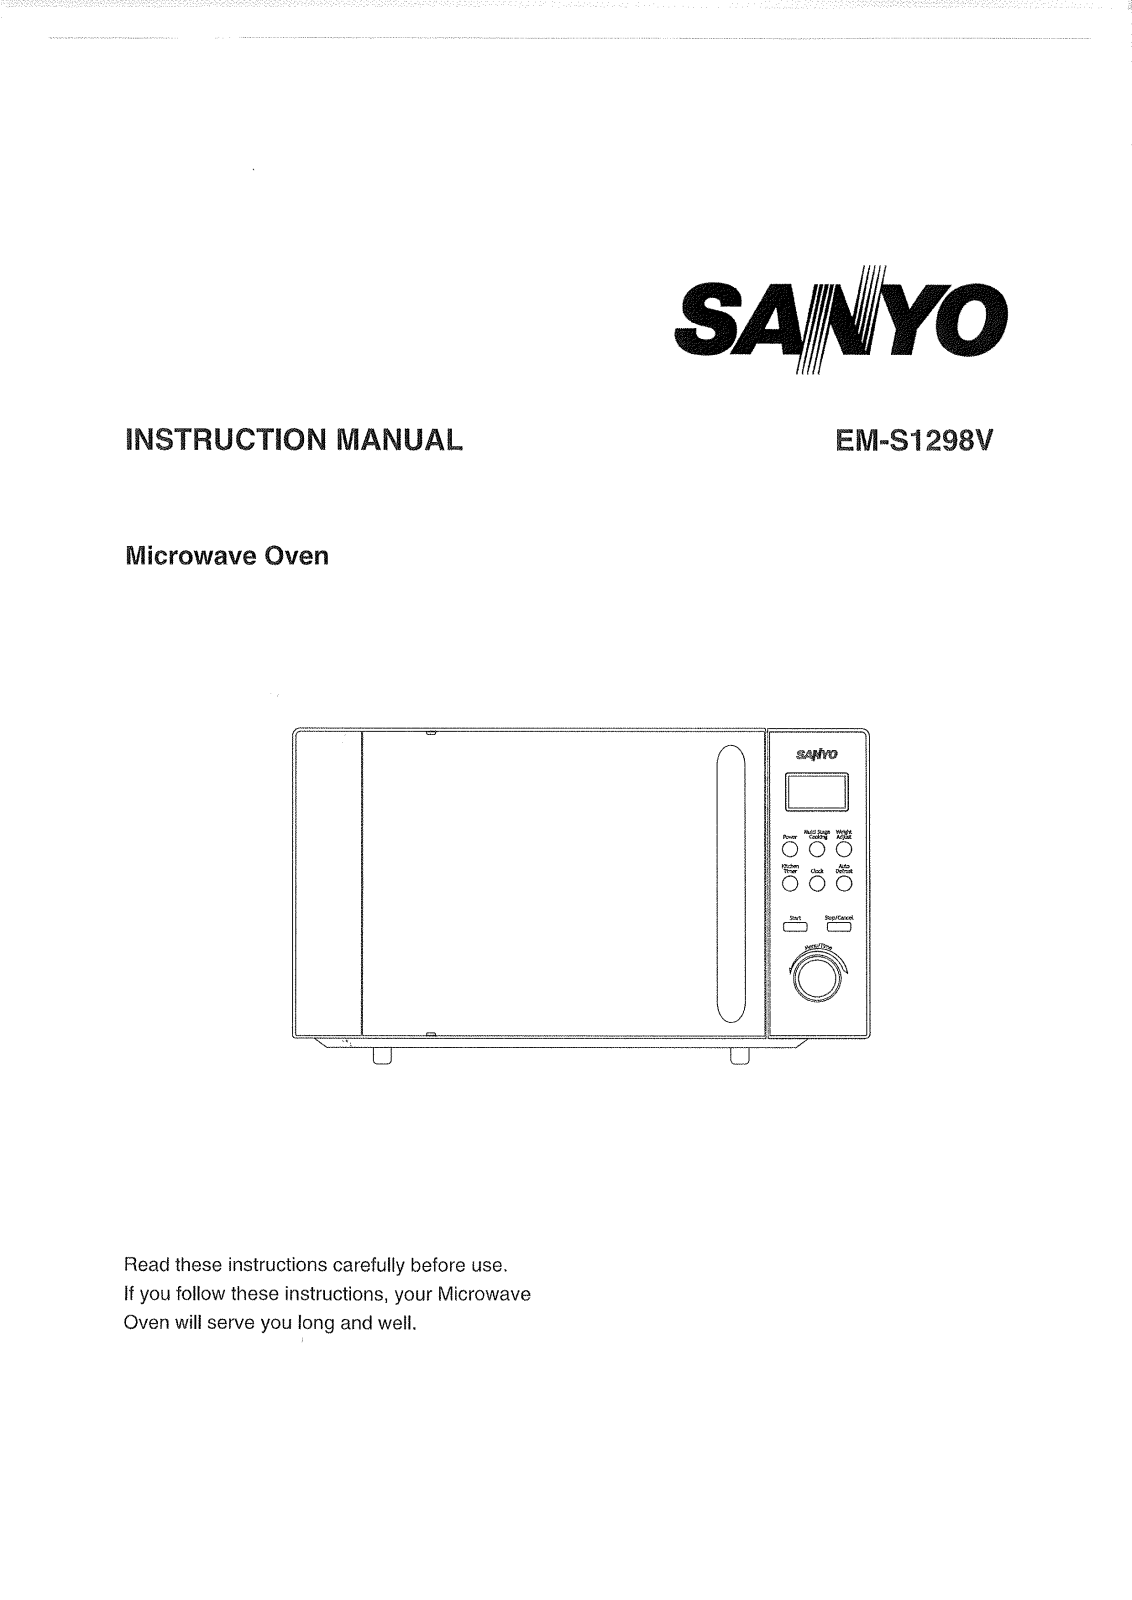 Sanyo EM-S1298V Instruction Manual